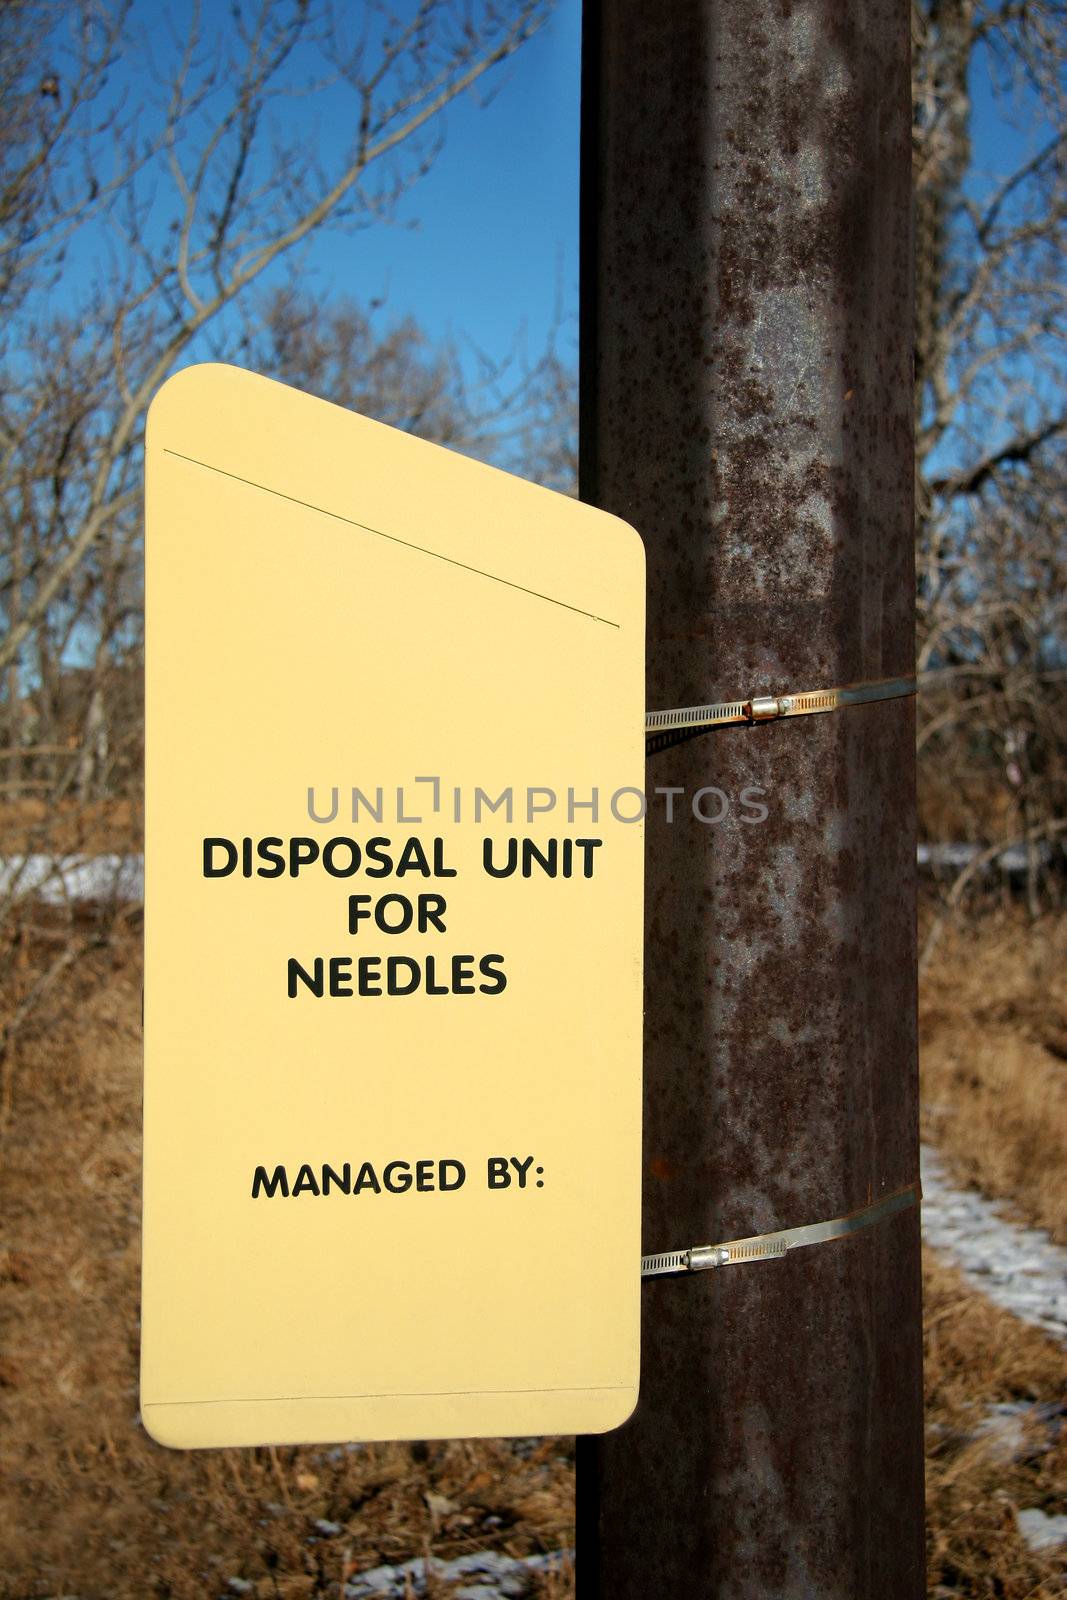 Needle deposit box